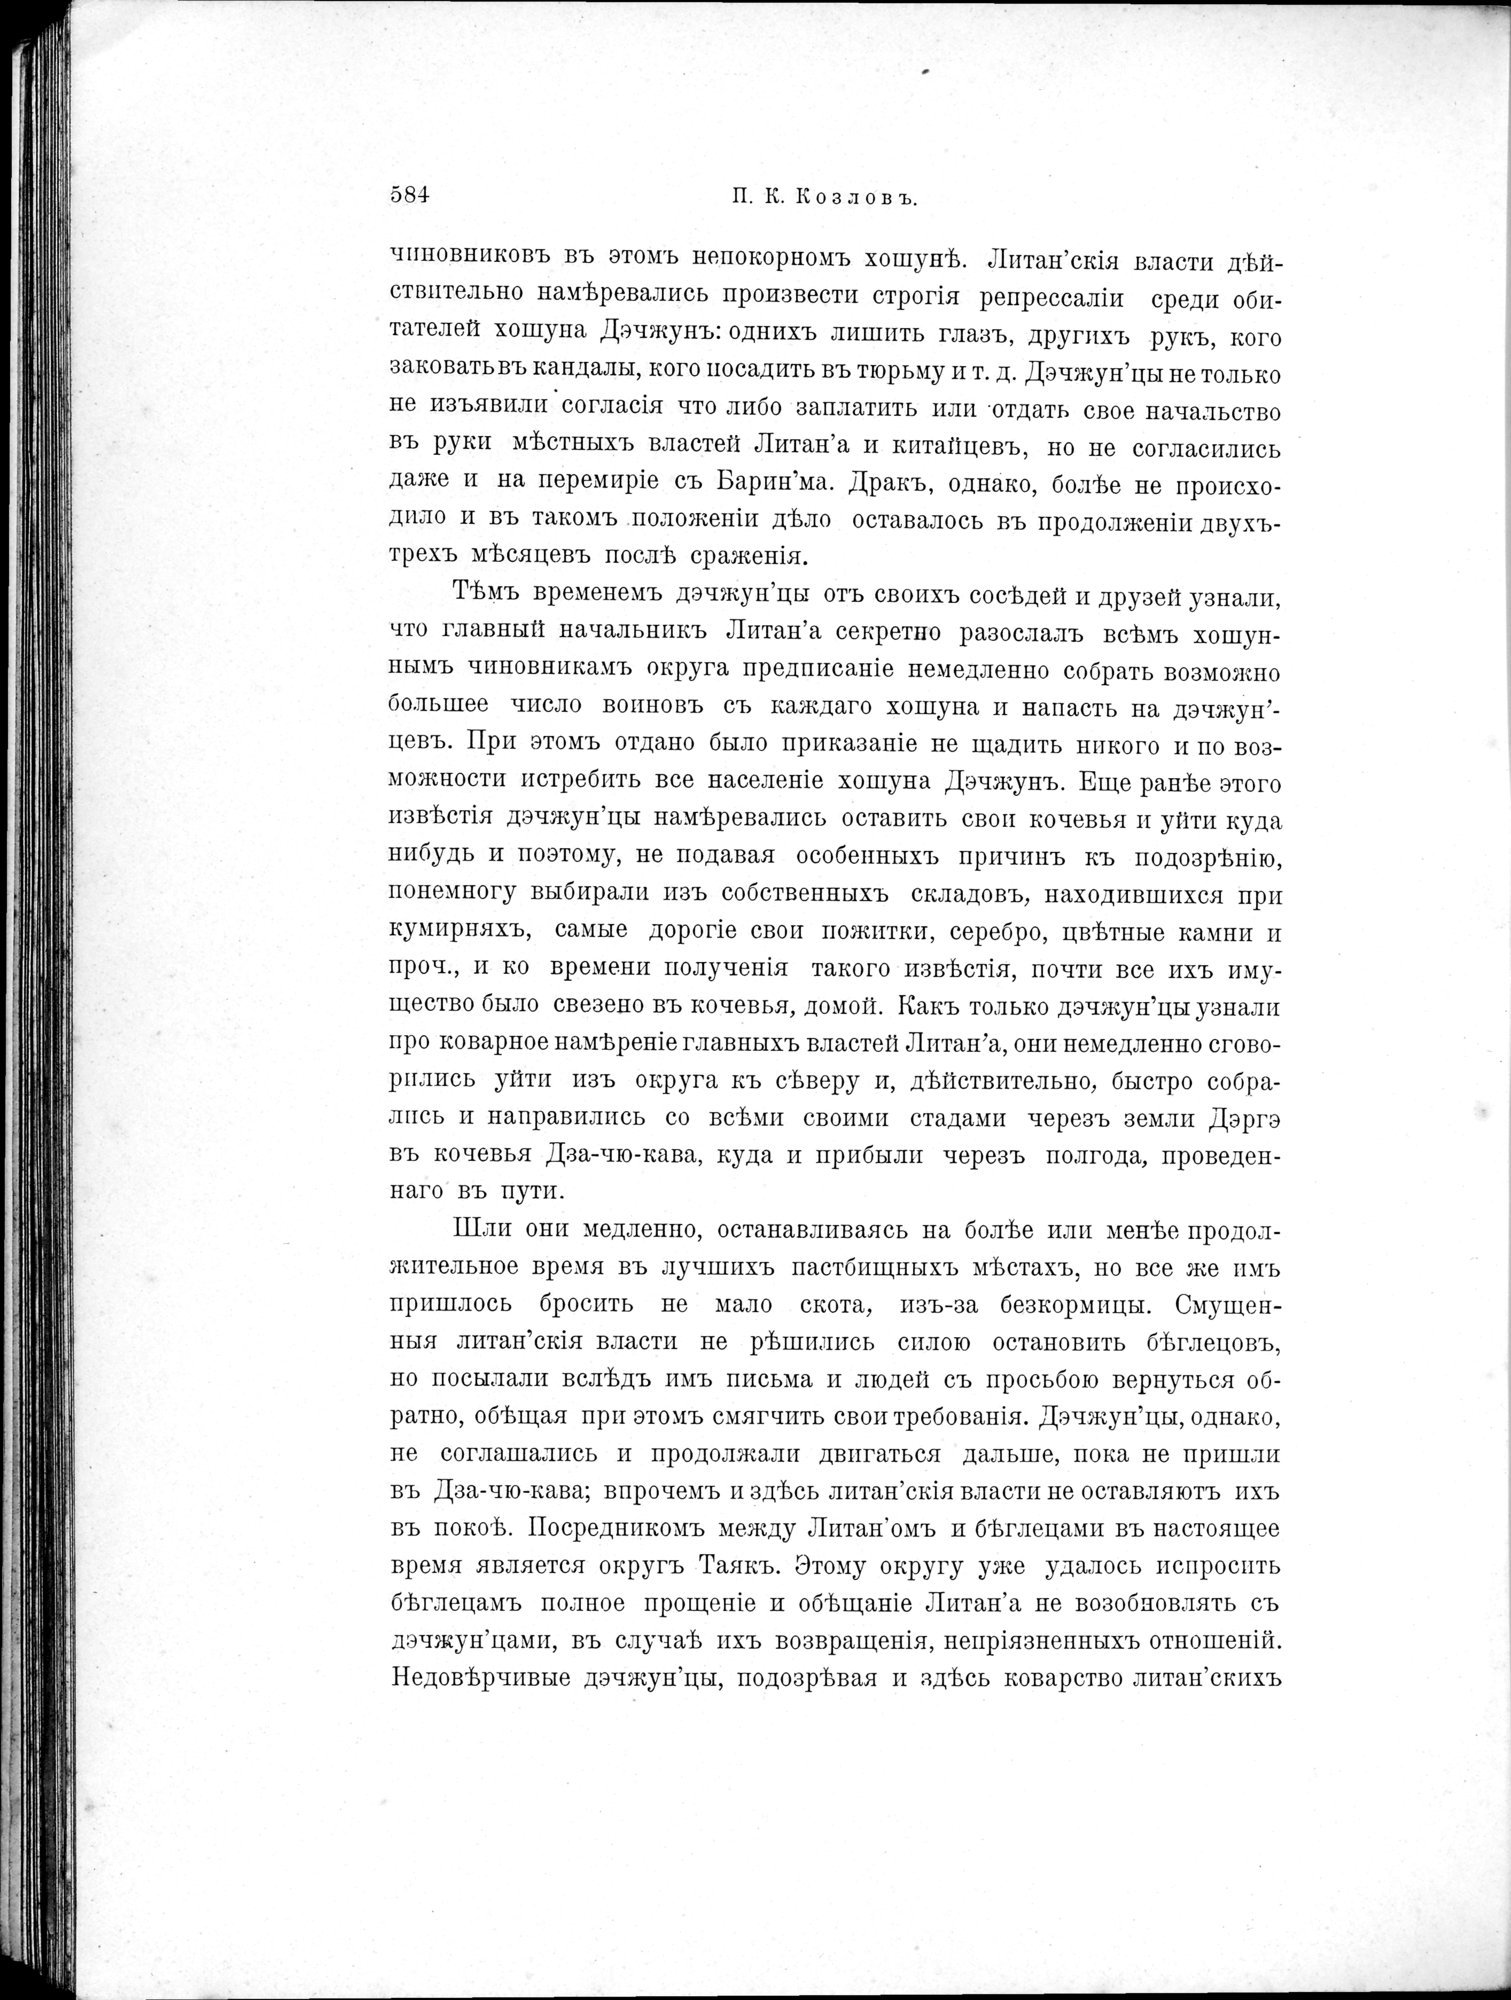 Mongoliia i Kam : vol.2 / Page 408 (Grayscale High Resolution Image)